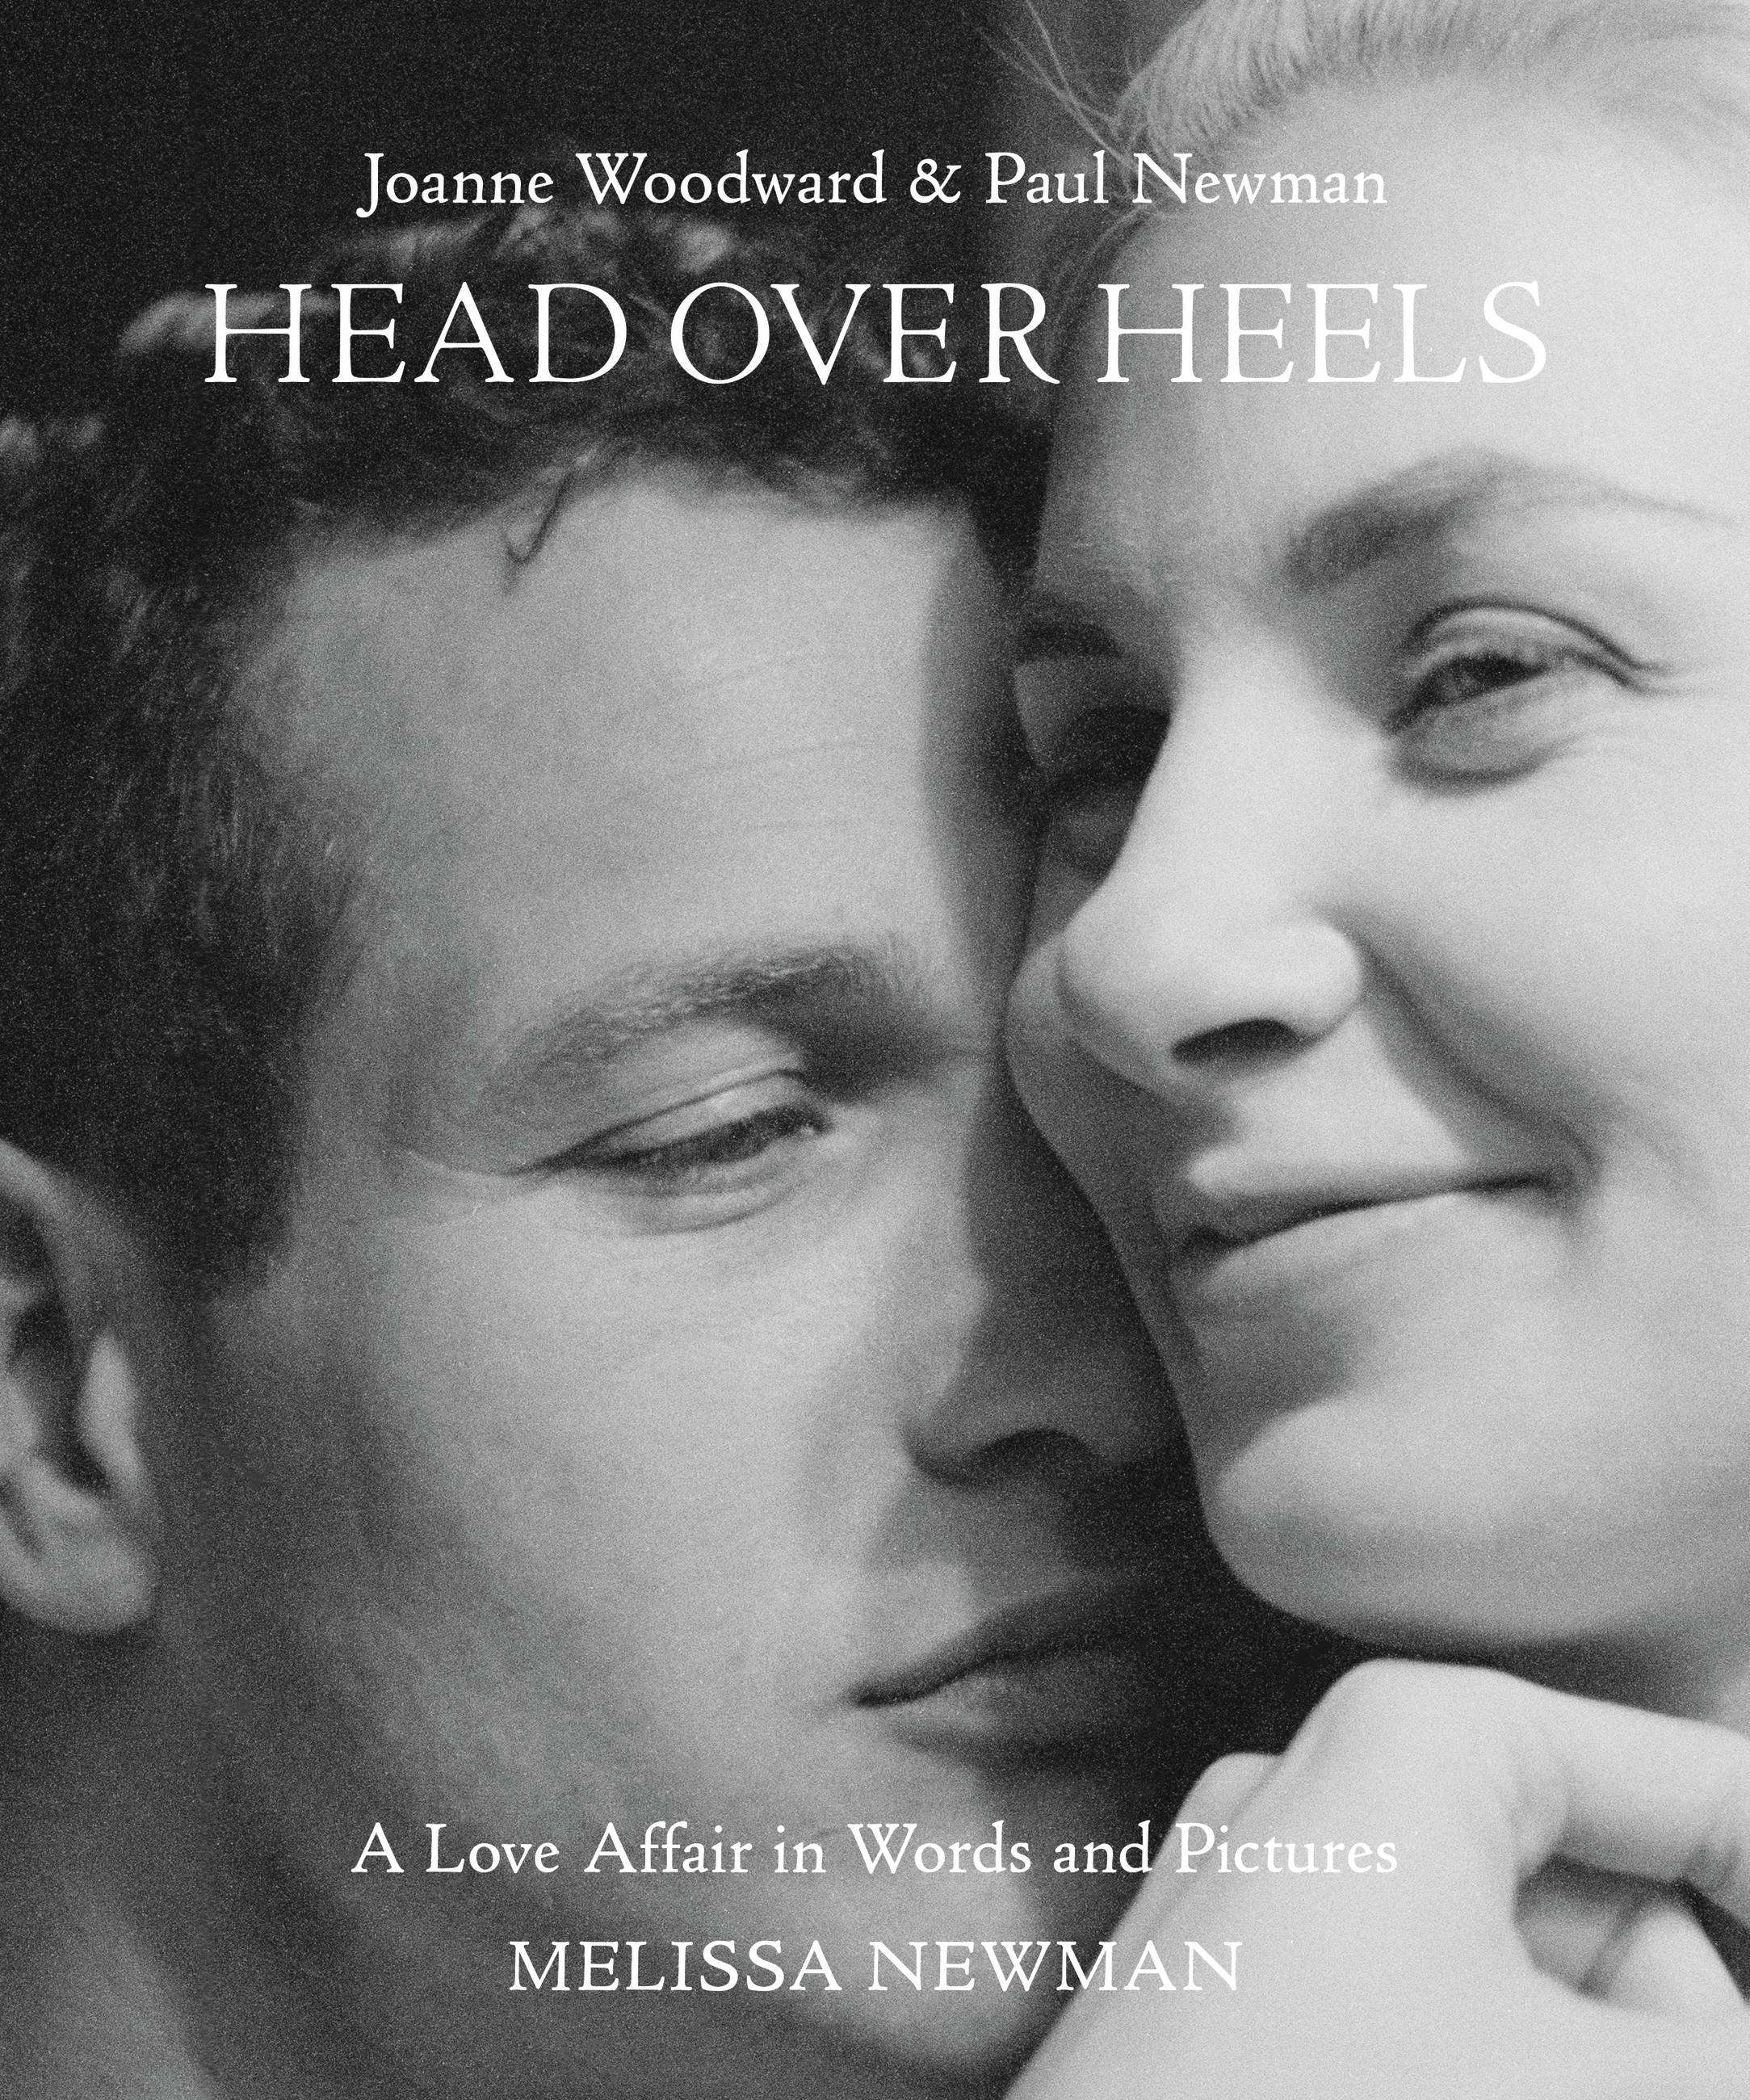 Cocteau Twins - Head Over Heels - Amazon.com Music